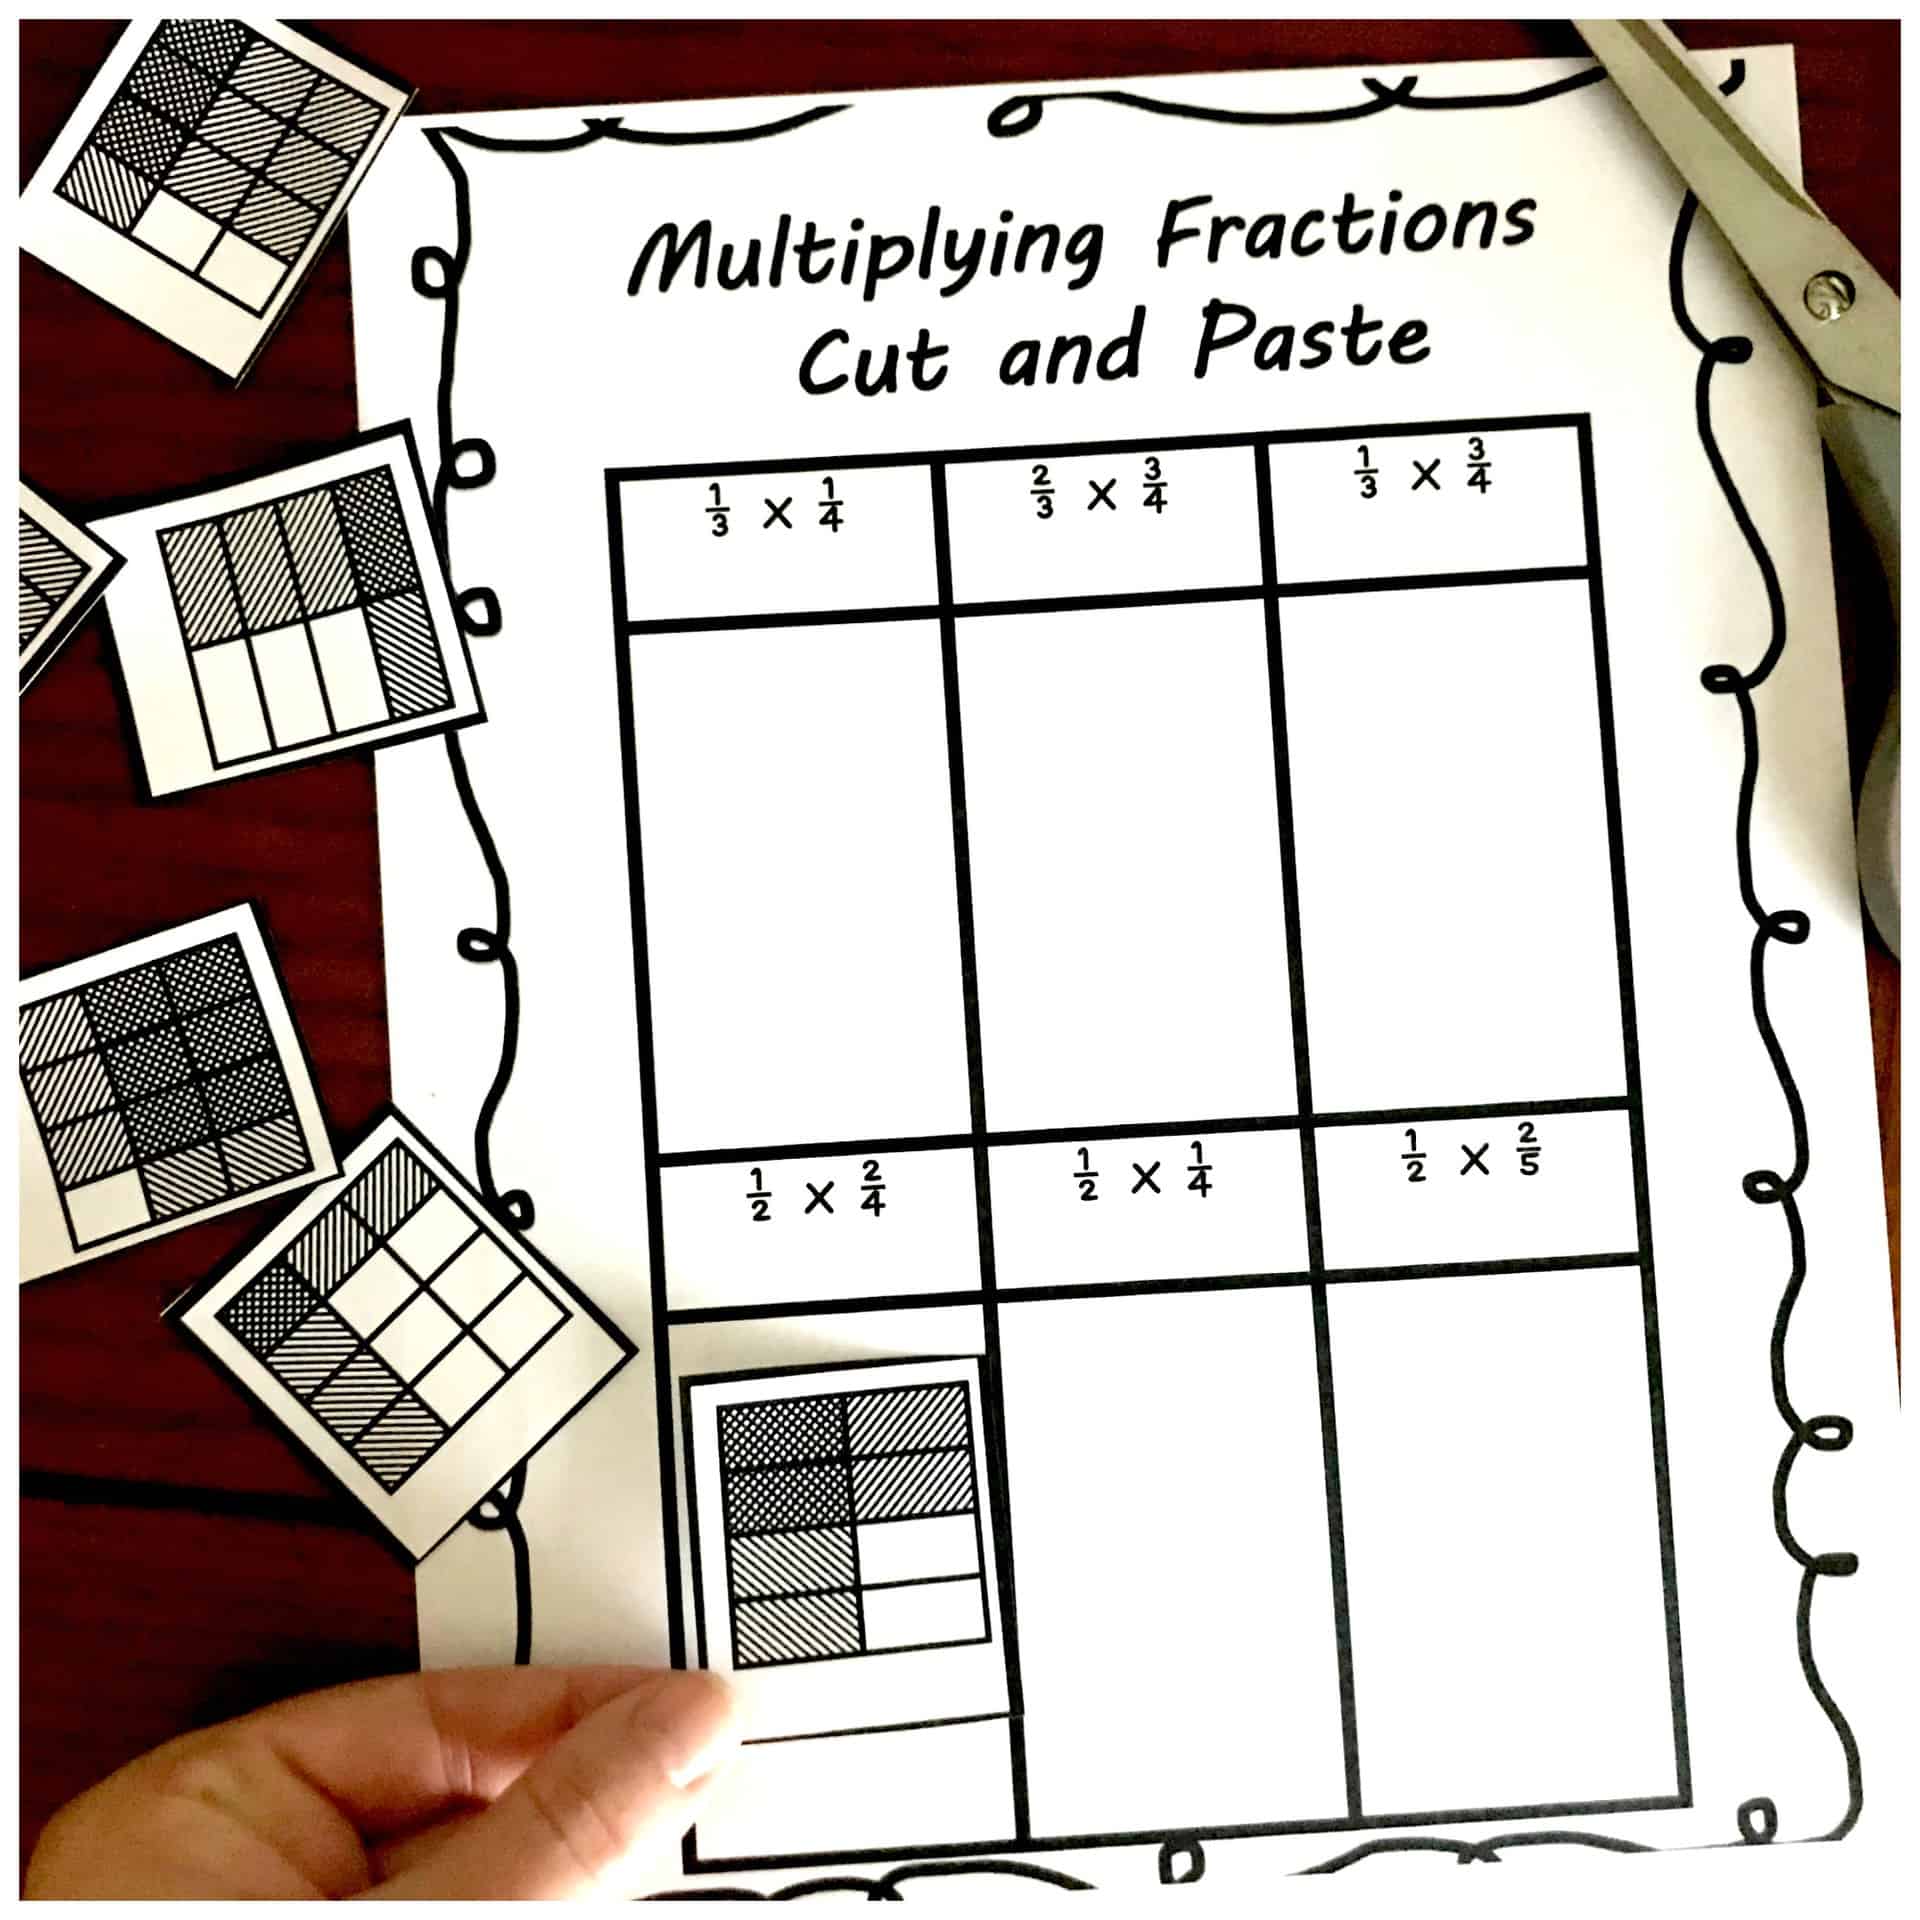 11 Cut and Paste Worksheets For Multiplying Fractions Practice For Multiplying Fractions Area Model Worksheet